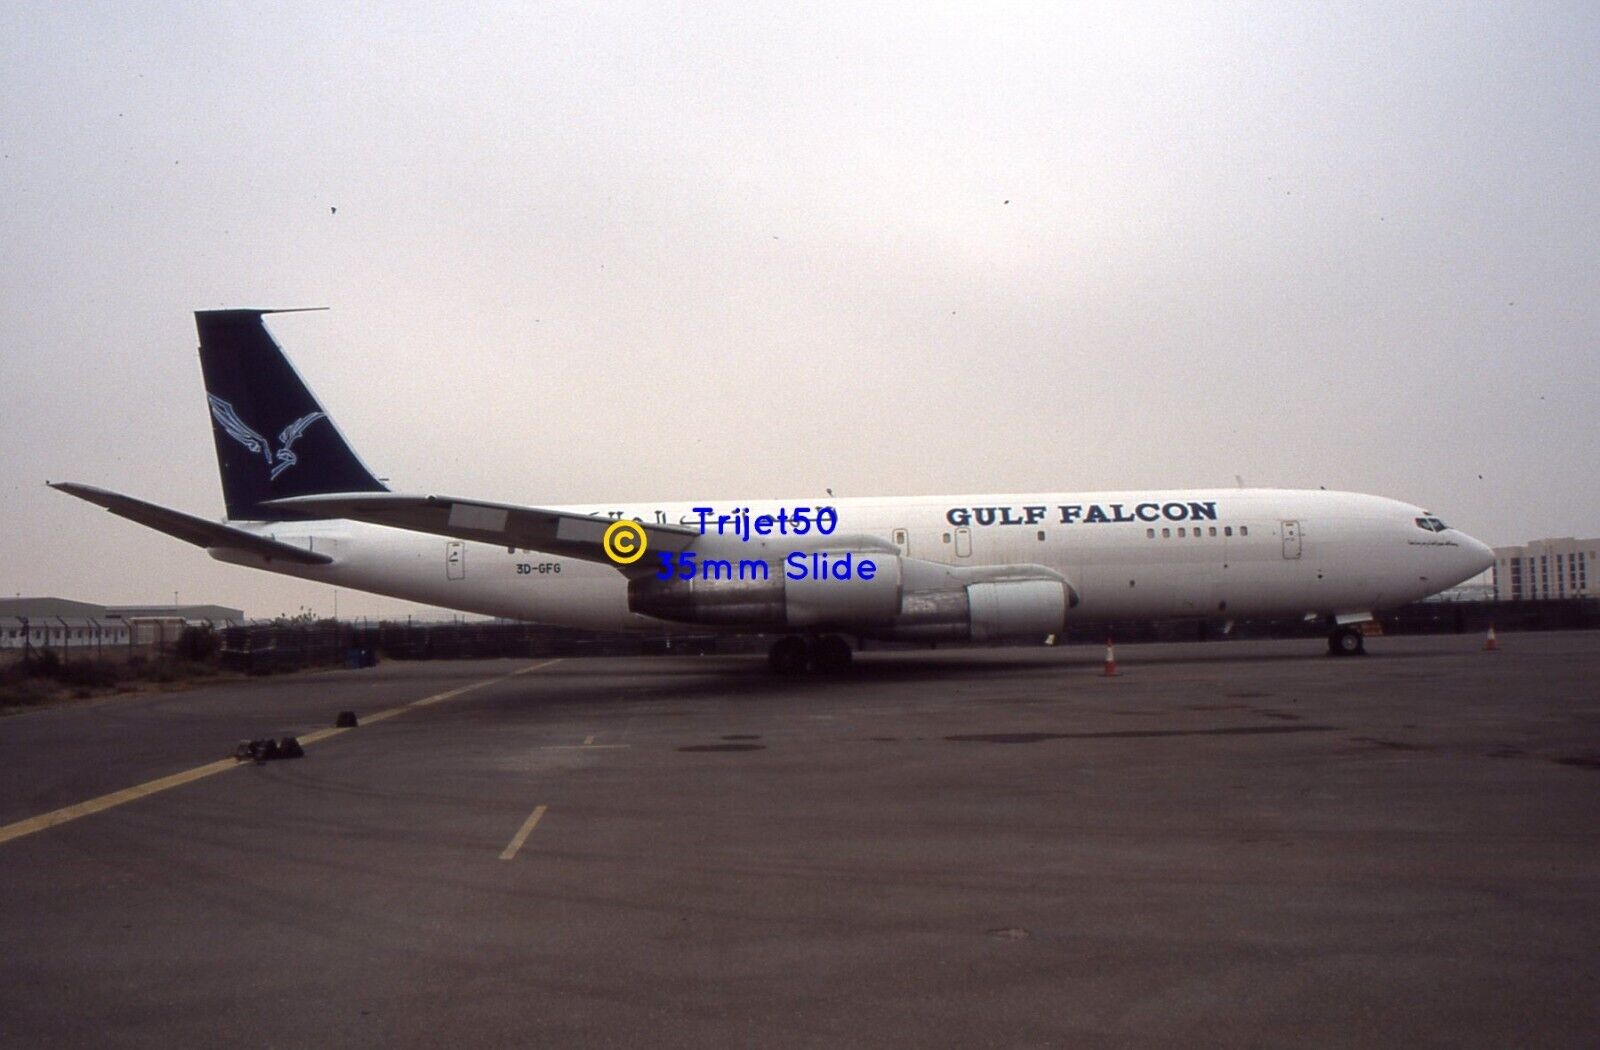 35mm Colour Slide Boeing 707 3D-GFG Gulf Falcon Sharjah 2002 Seller Ref PRM62